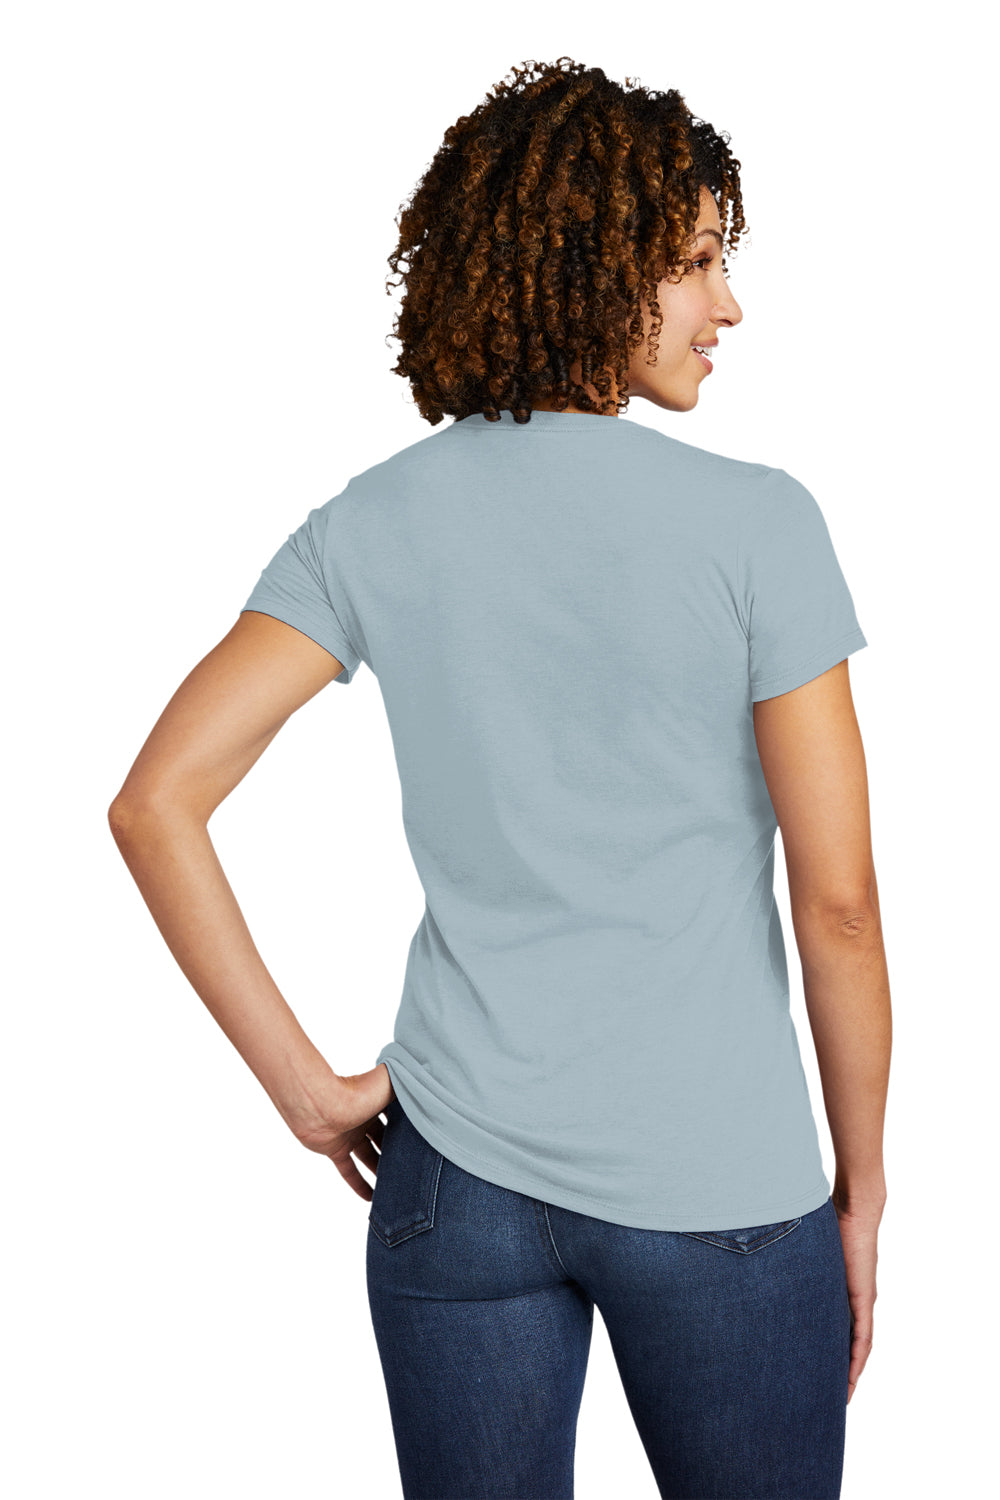 Allmade AL2018 Womens Short Sleeve V-Neck T-Shirt I Like You Blue Model Back